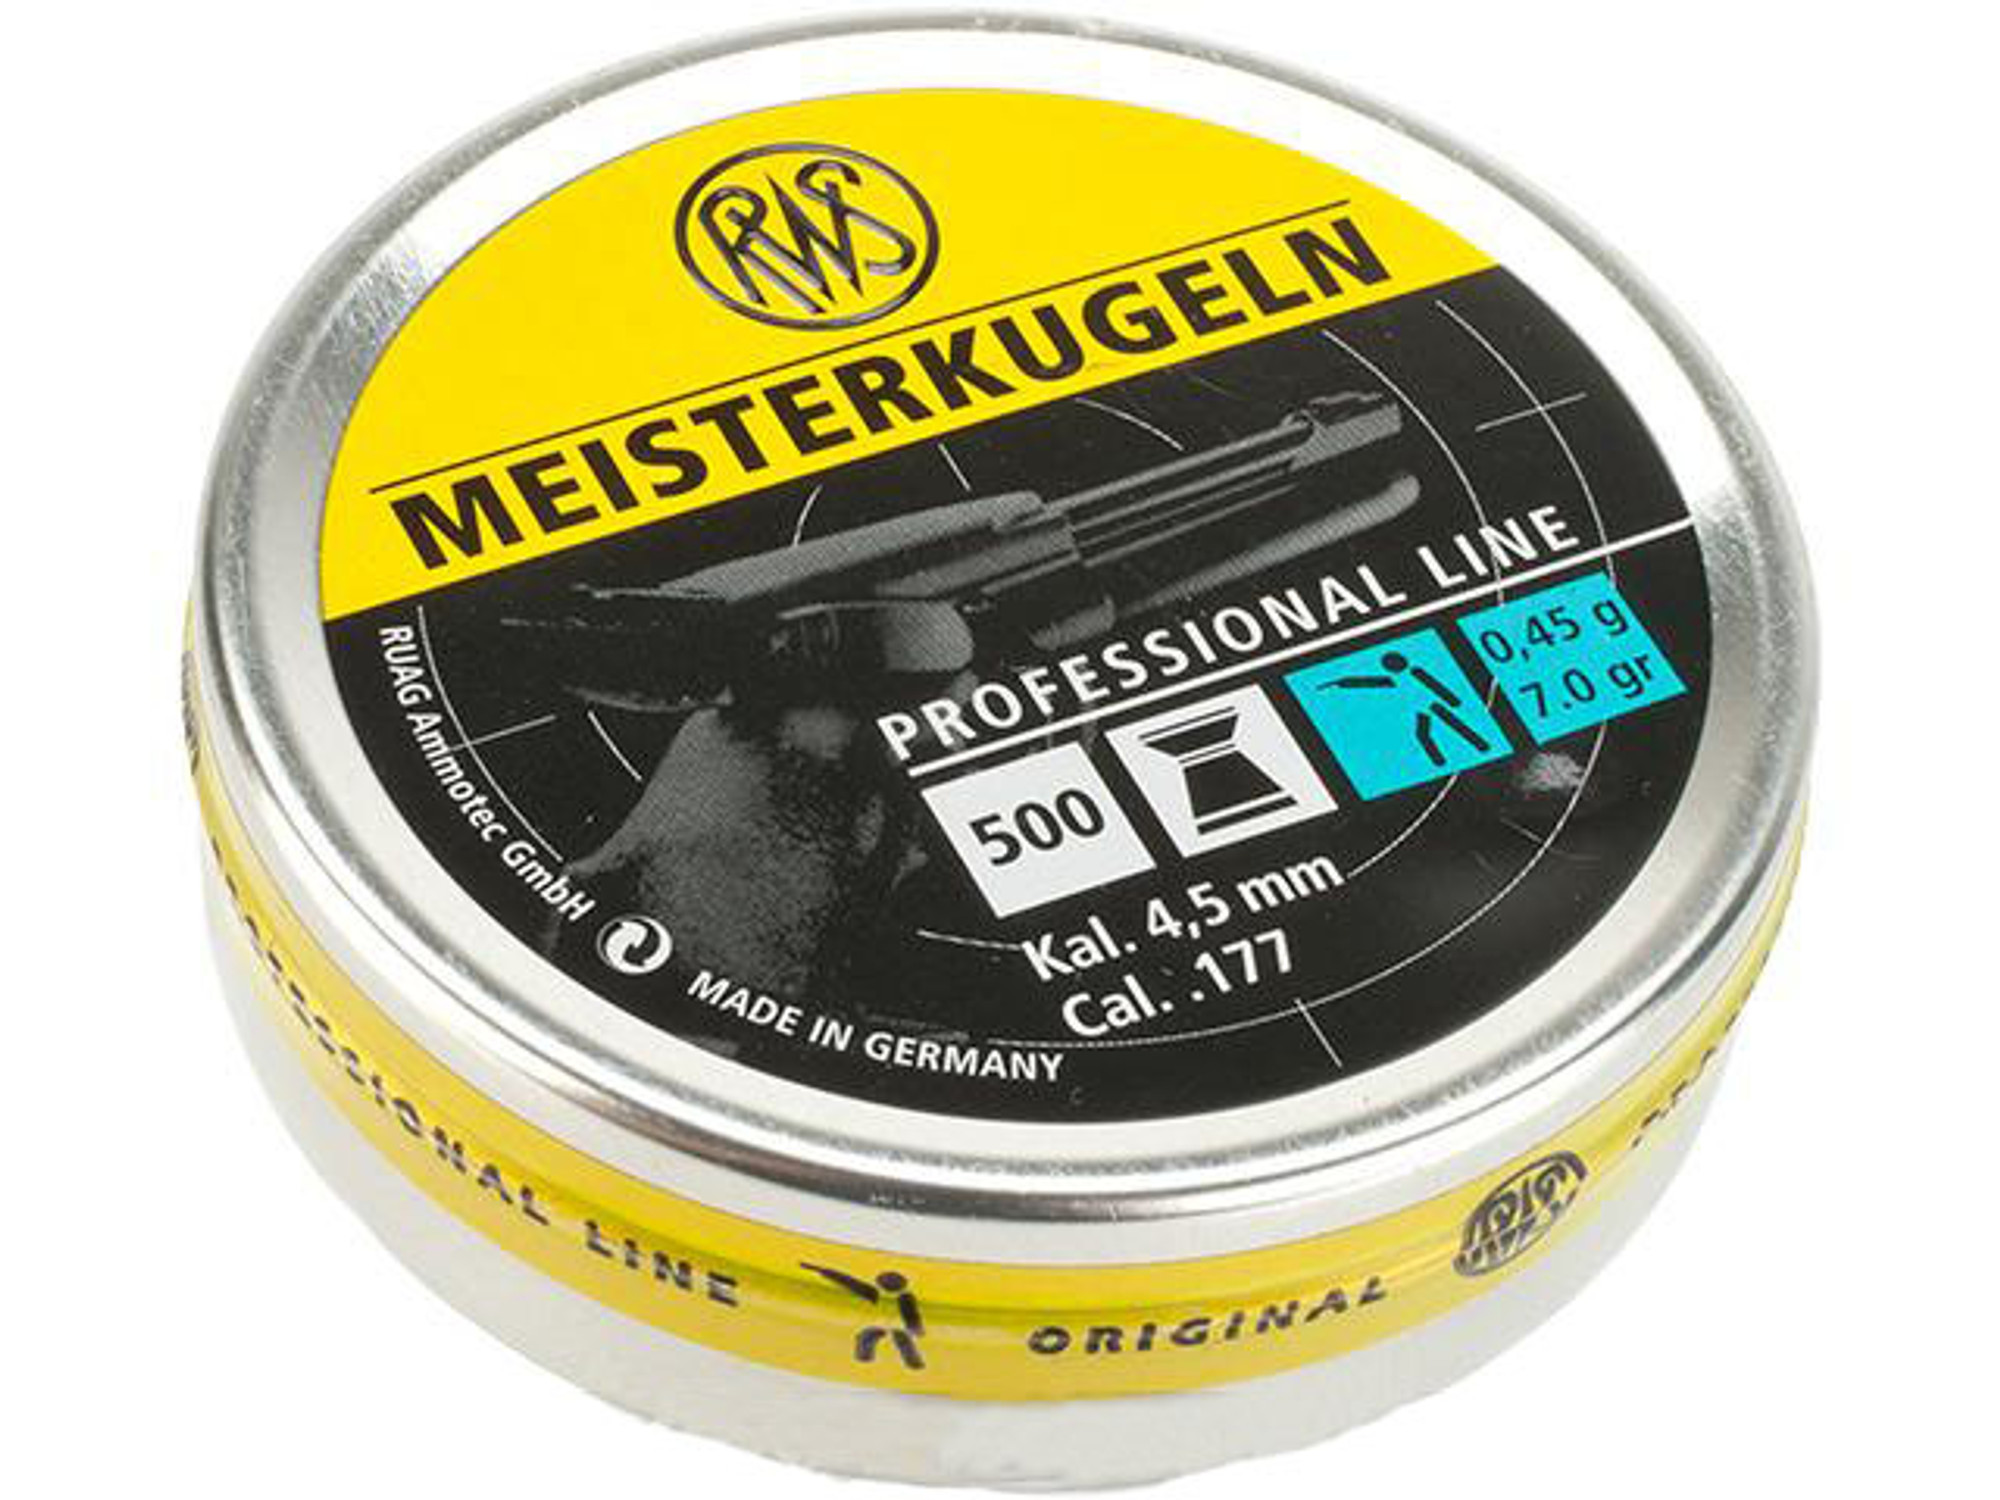 RWS Meisterkugeln Pistol 4.5mm 8.2Grain Pellets - 500 count